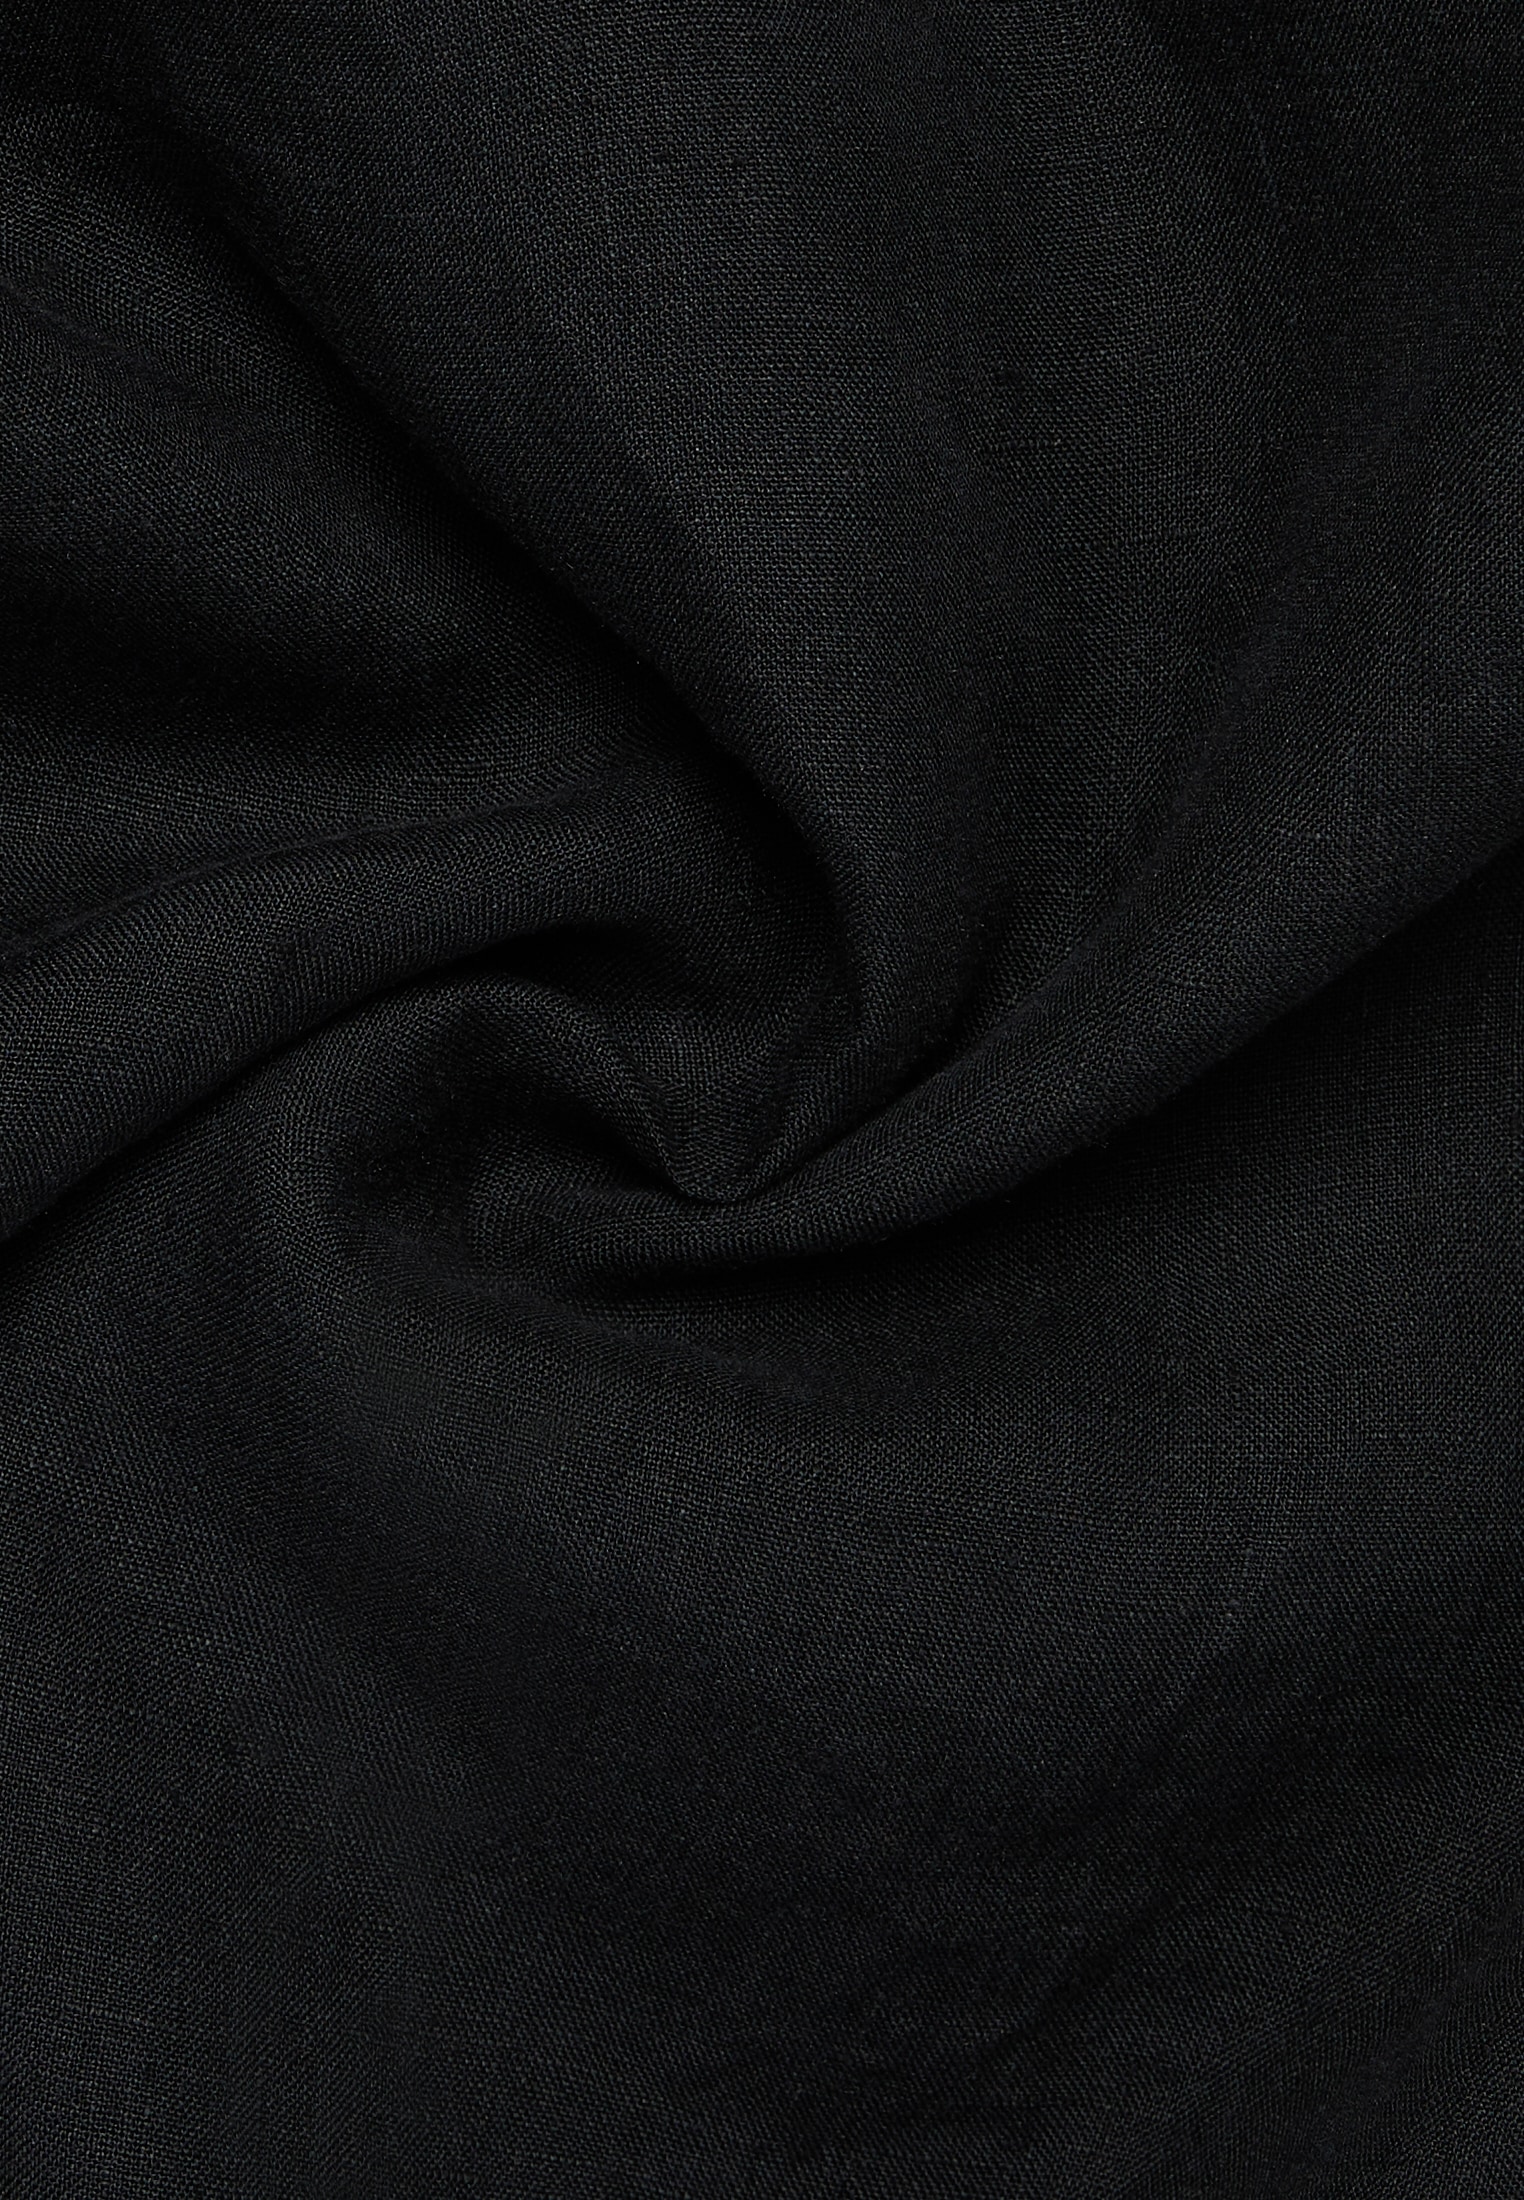 overhemdblouse in zwart vlakte